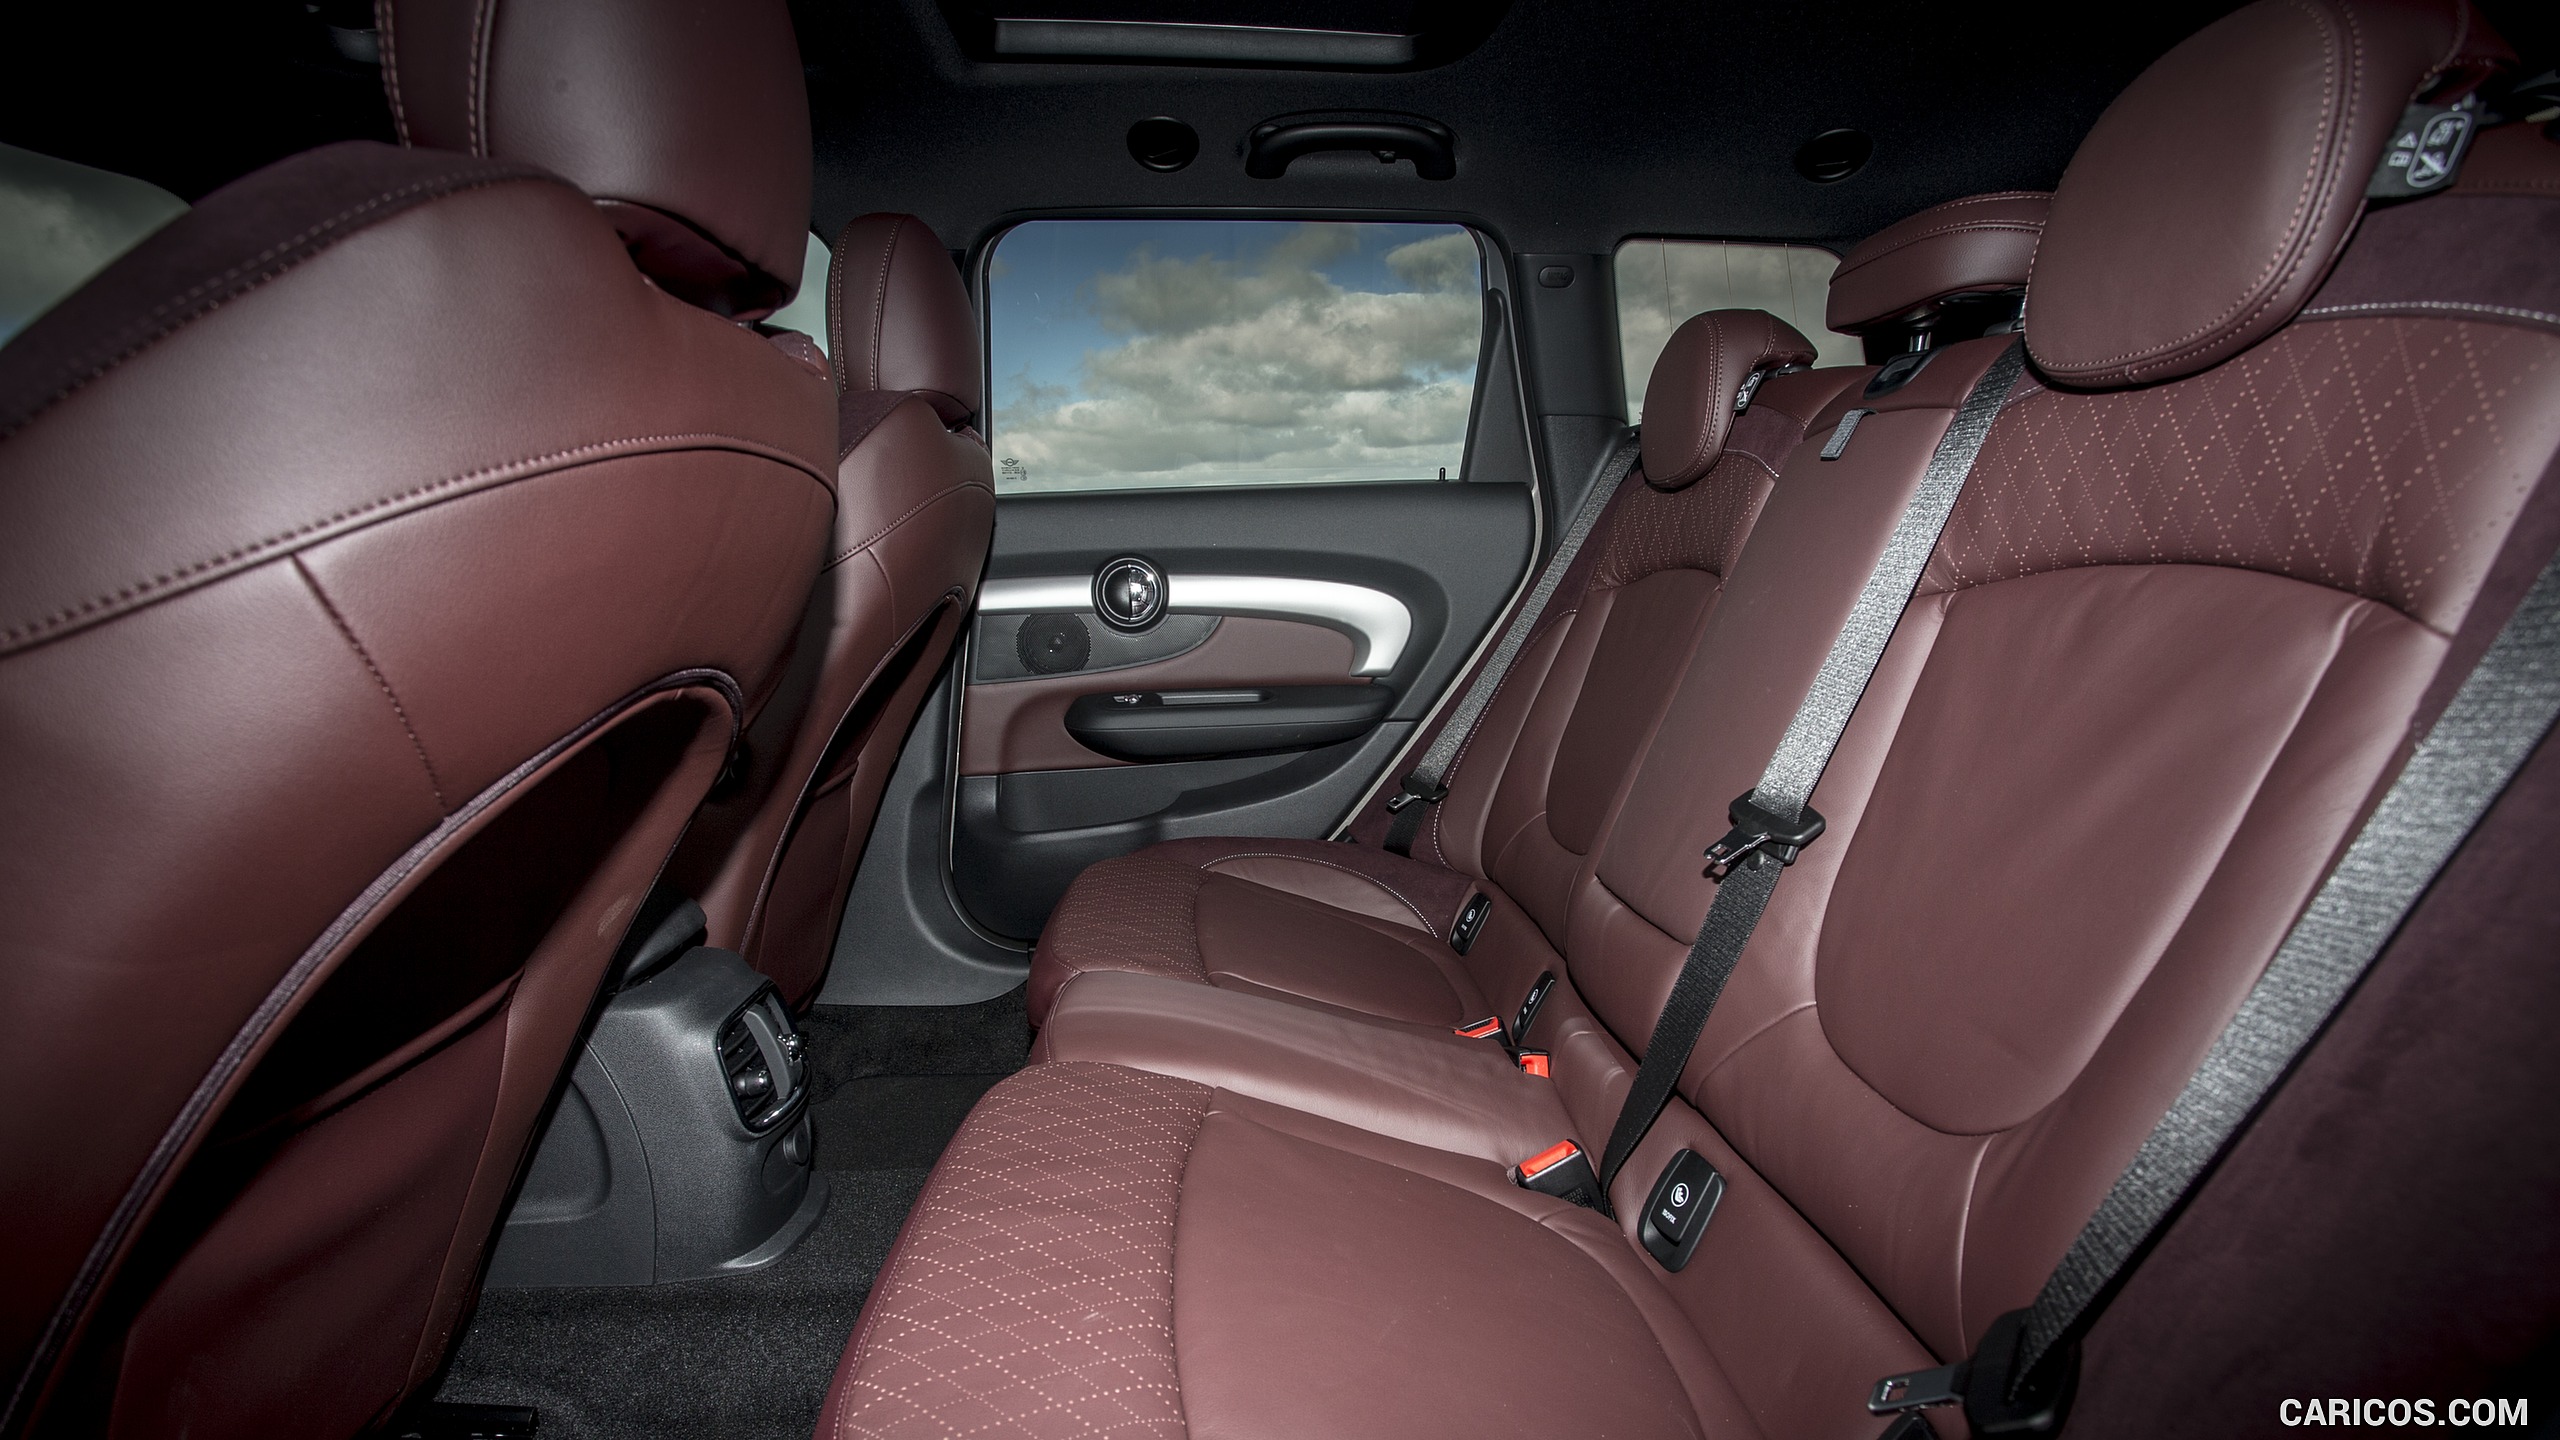 2016 MINI Cooper Clubman S (UK-Spec) - Interior, Rear Seats, #249 of 275